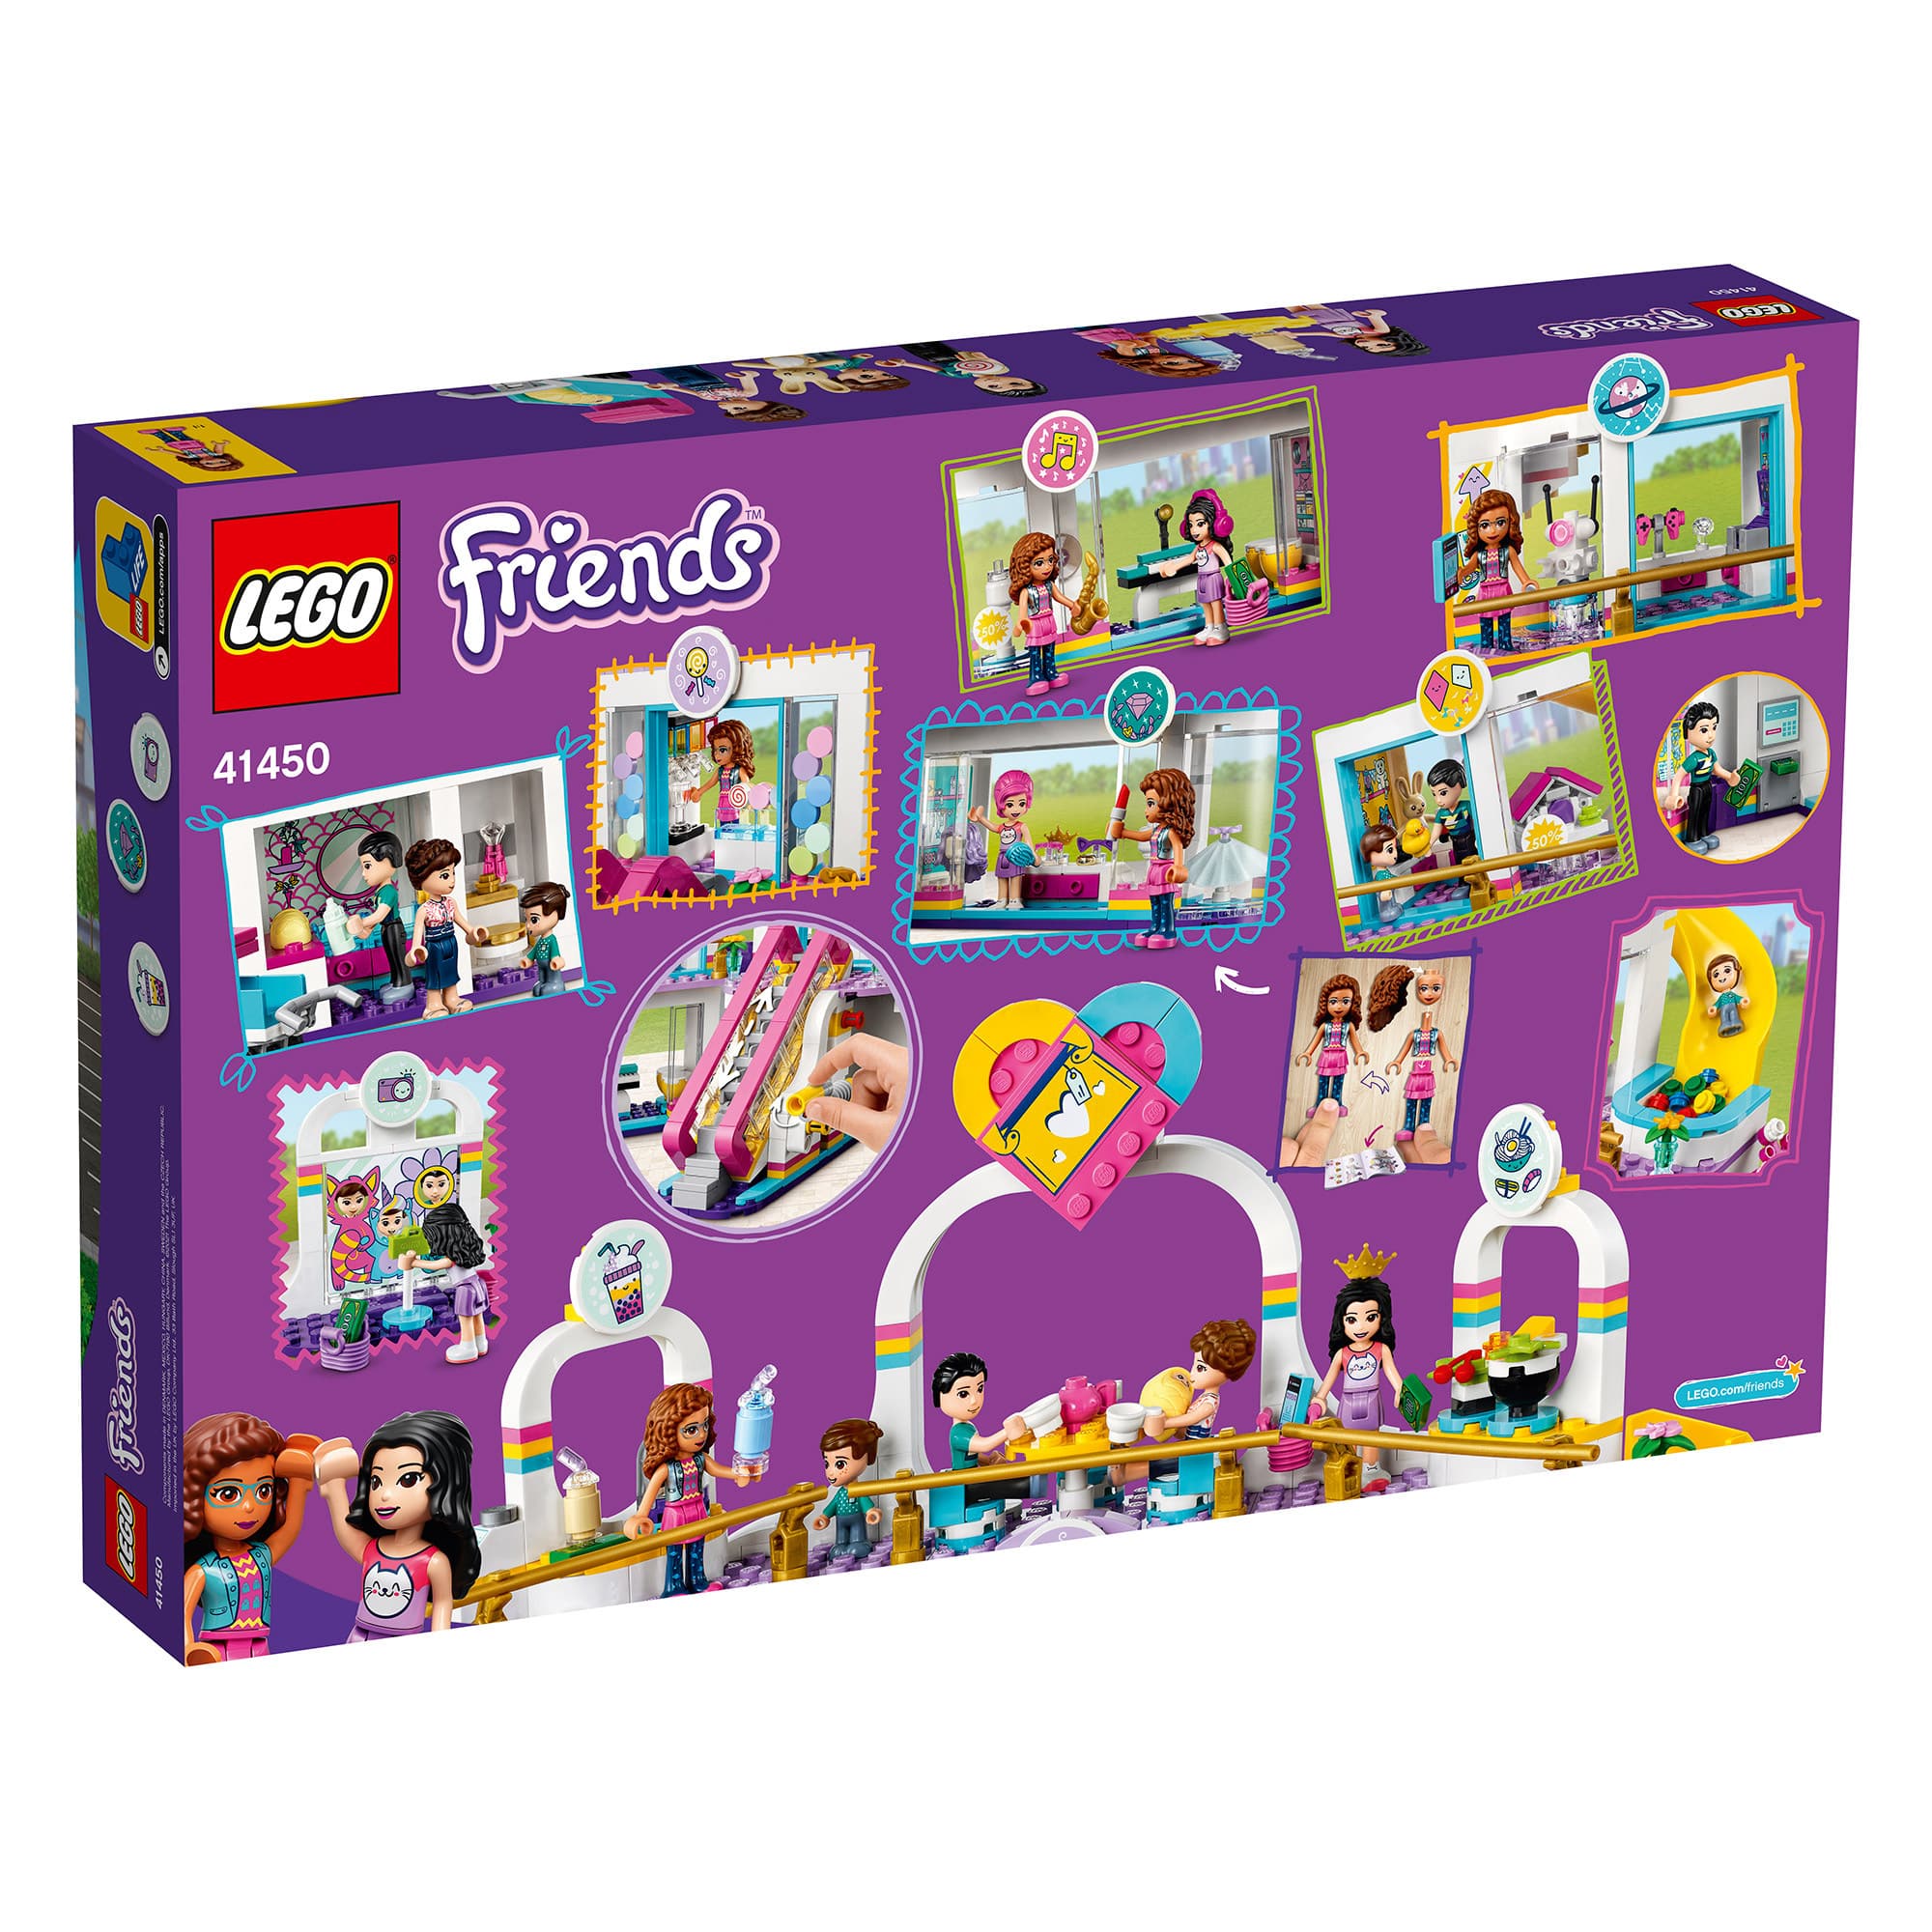 LEGO Friends 41450 - Heartlake City Shopping Mall